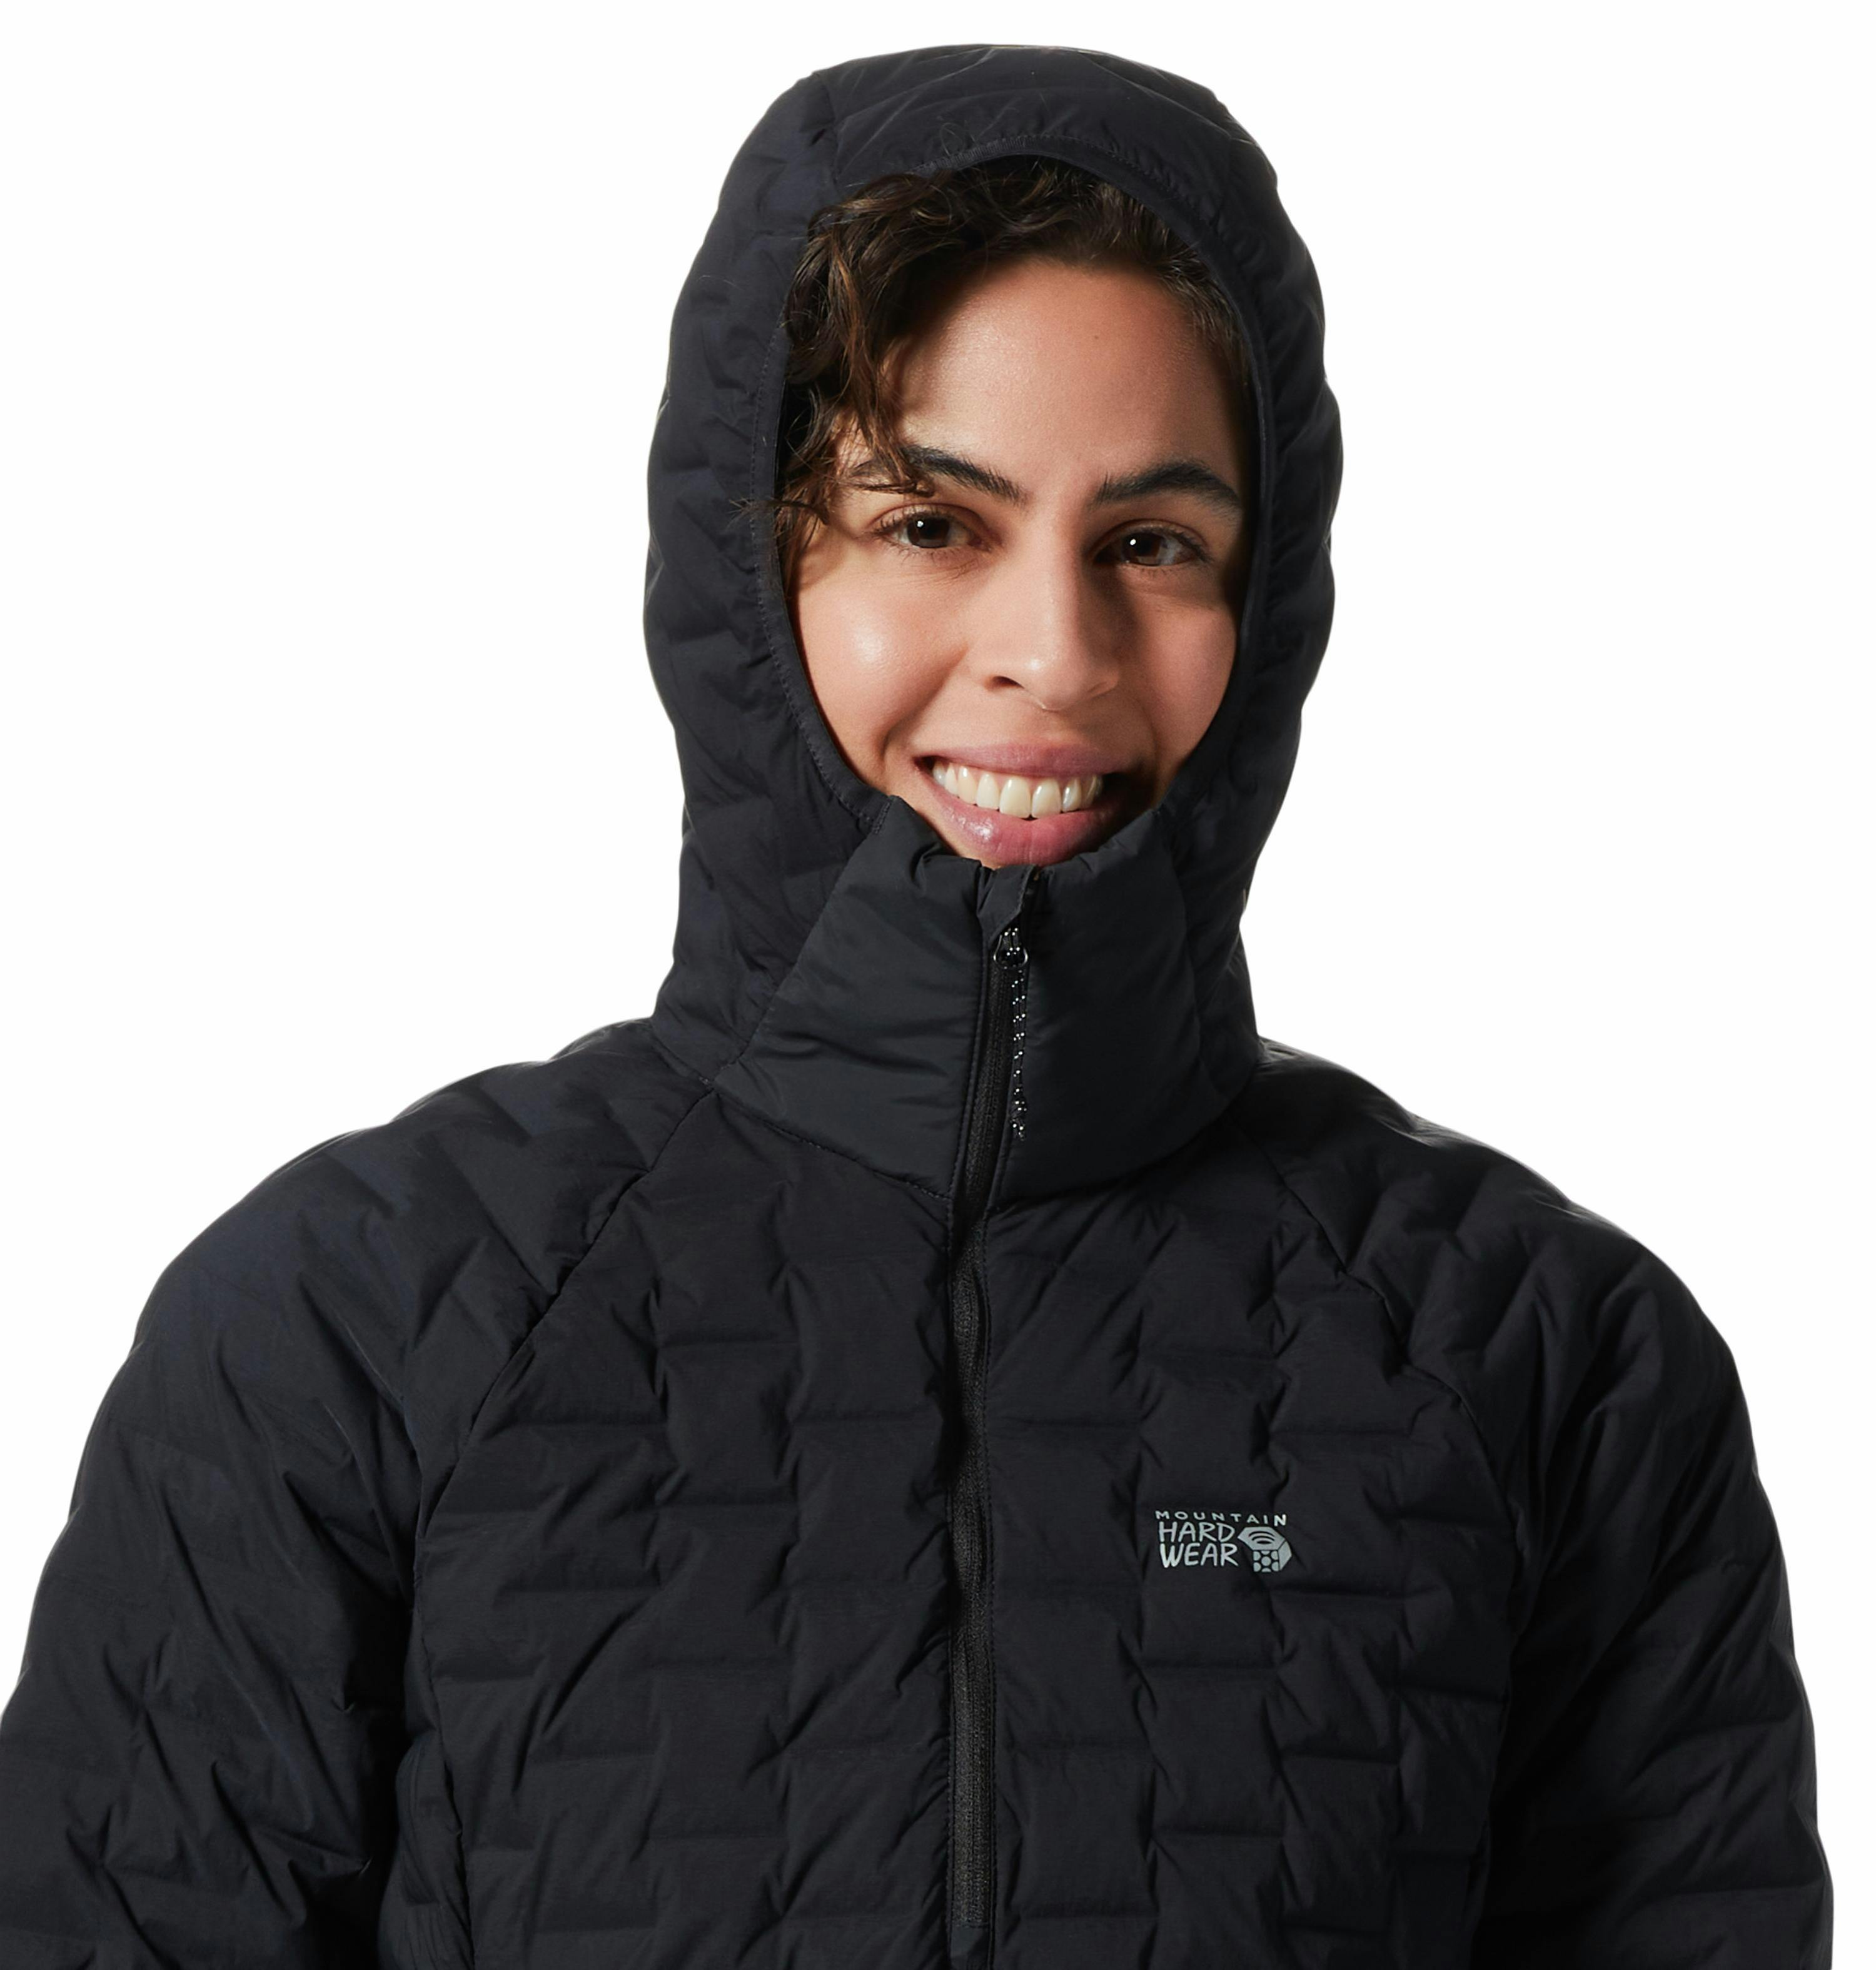 Mountain Hardwear Women's Stretchdown™ Light Pullover Insulated Jacket